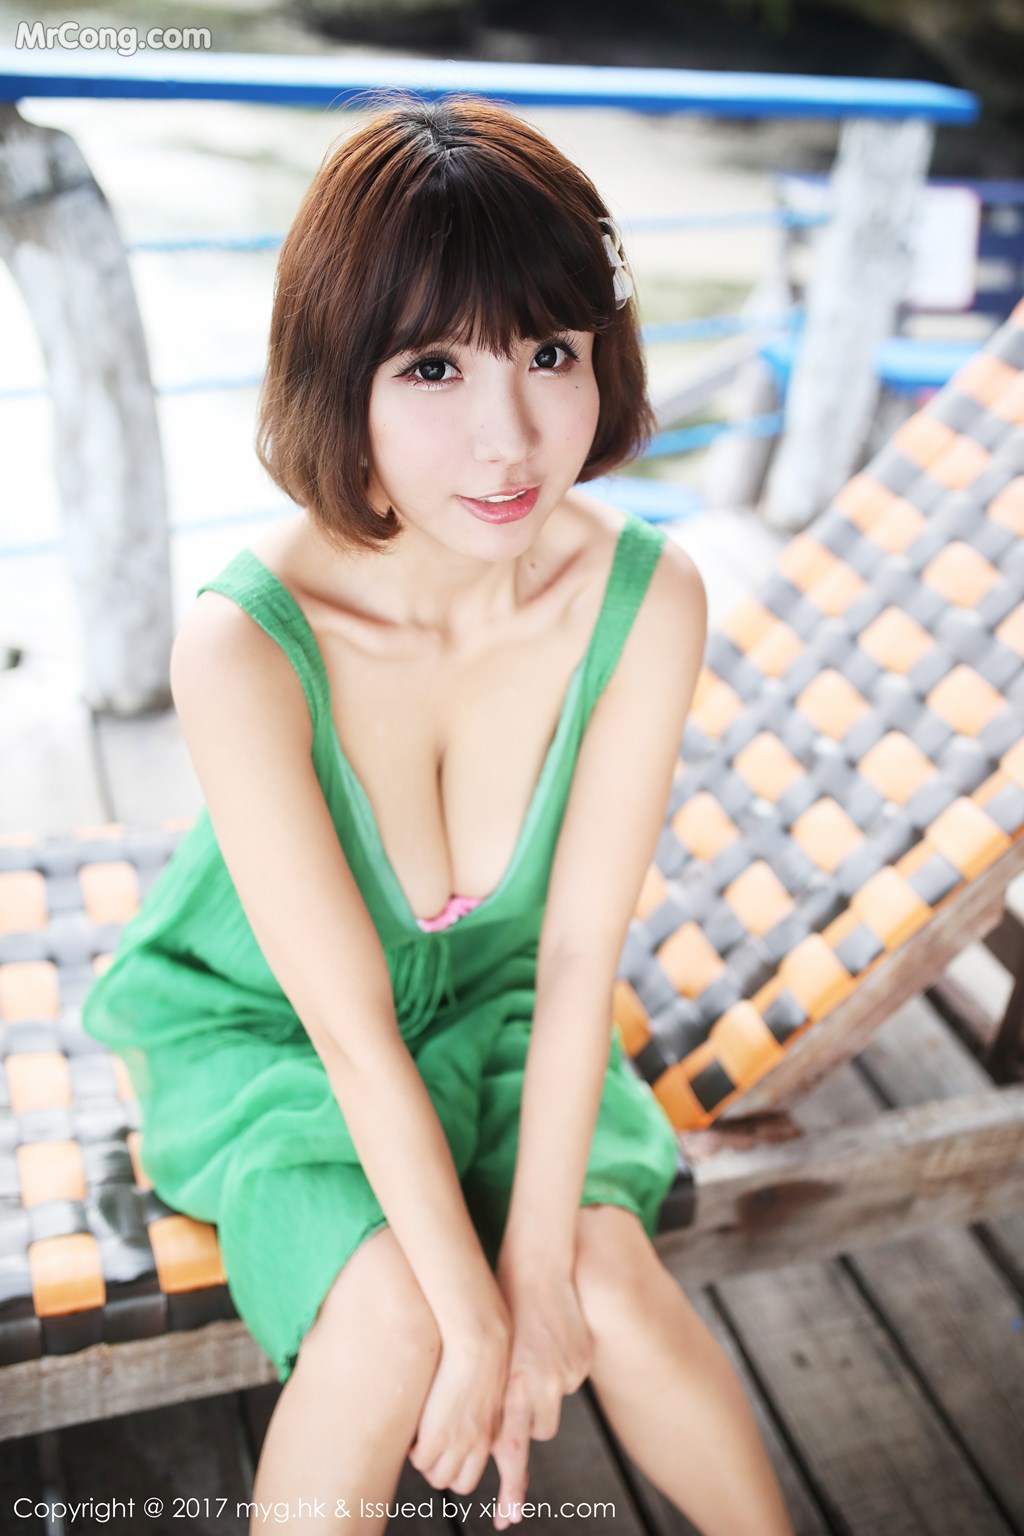 MyGirl Vol. 677: Sunny Model (晓 茜) (77 photos) photo 2-3